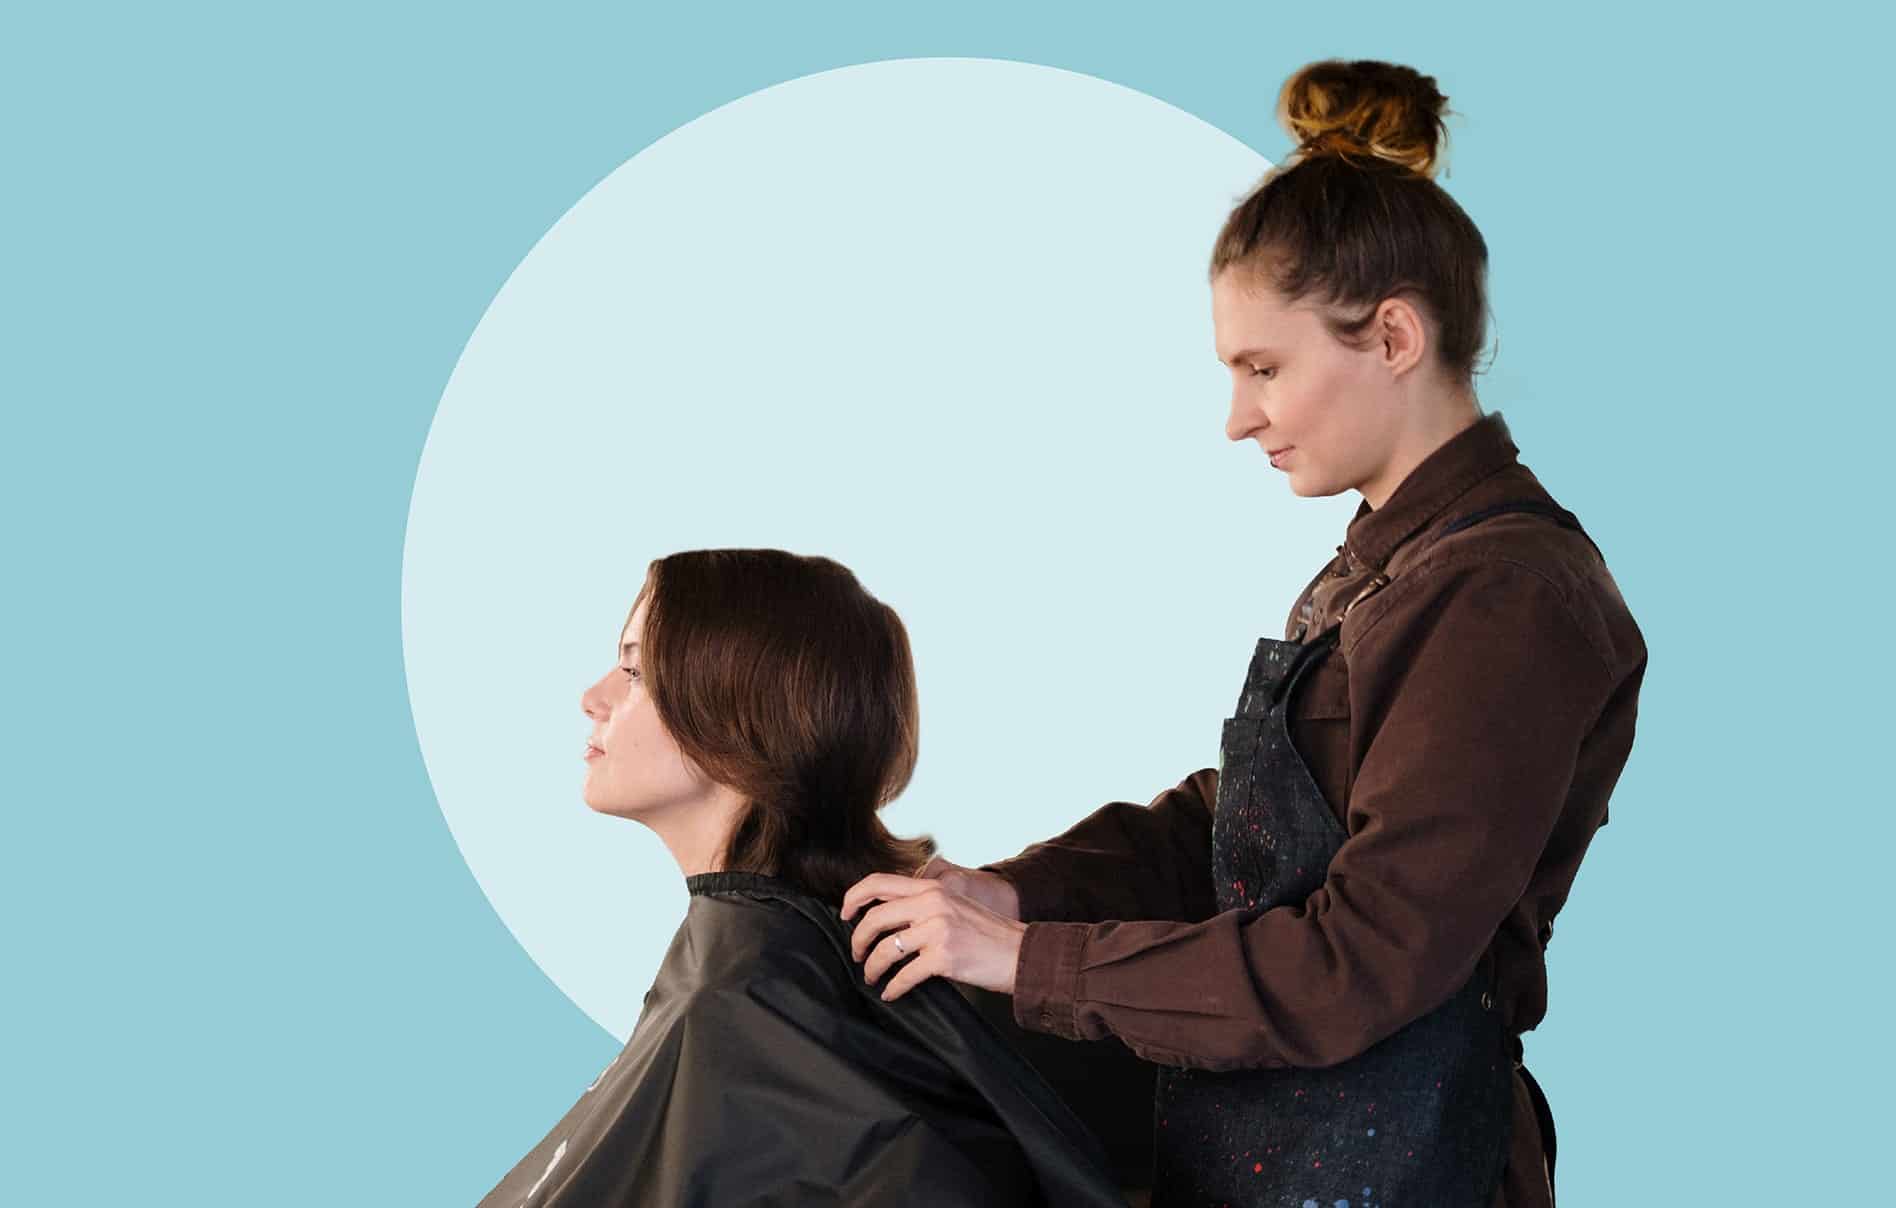 A stylist preparing a client for a cut